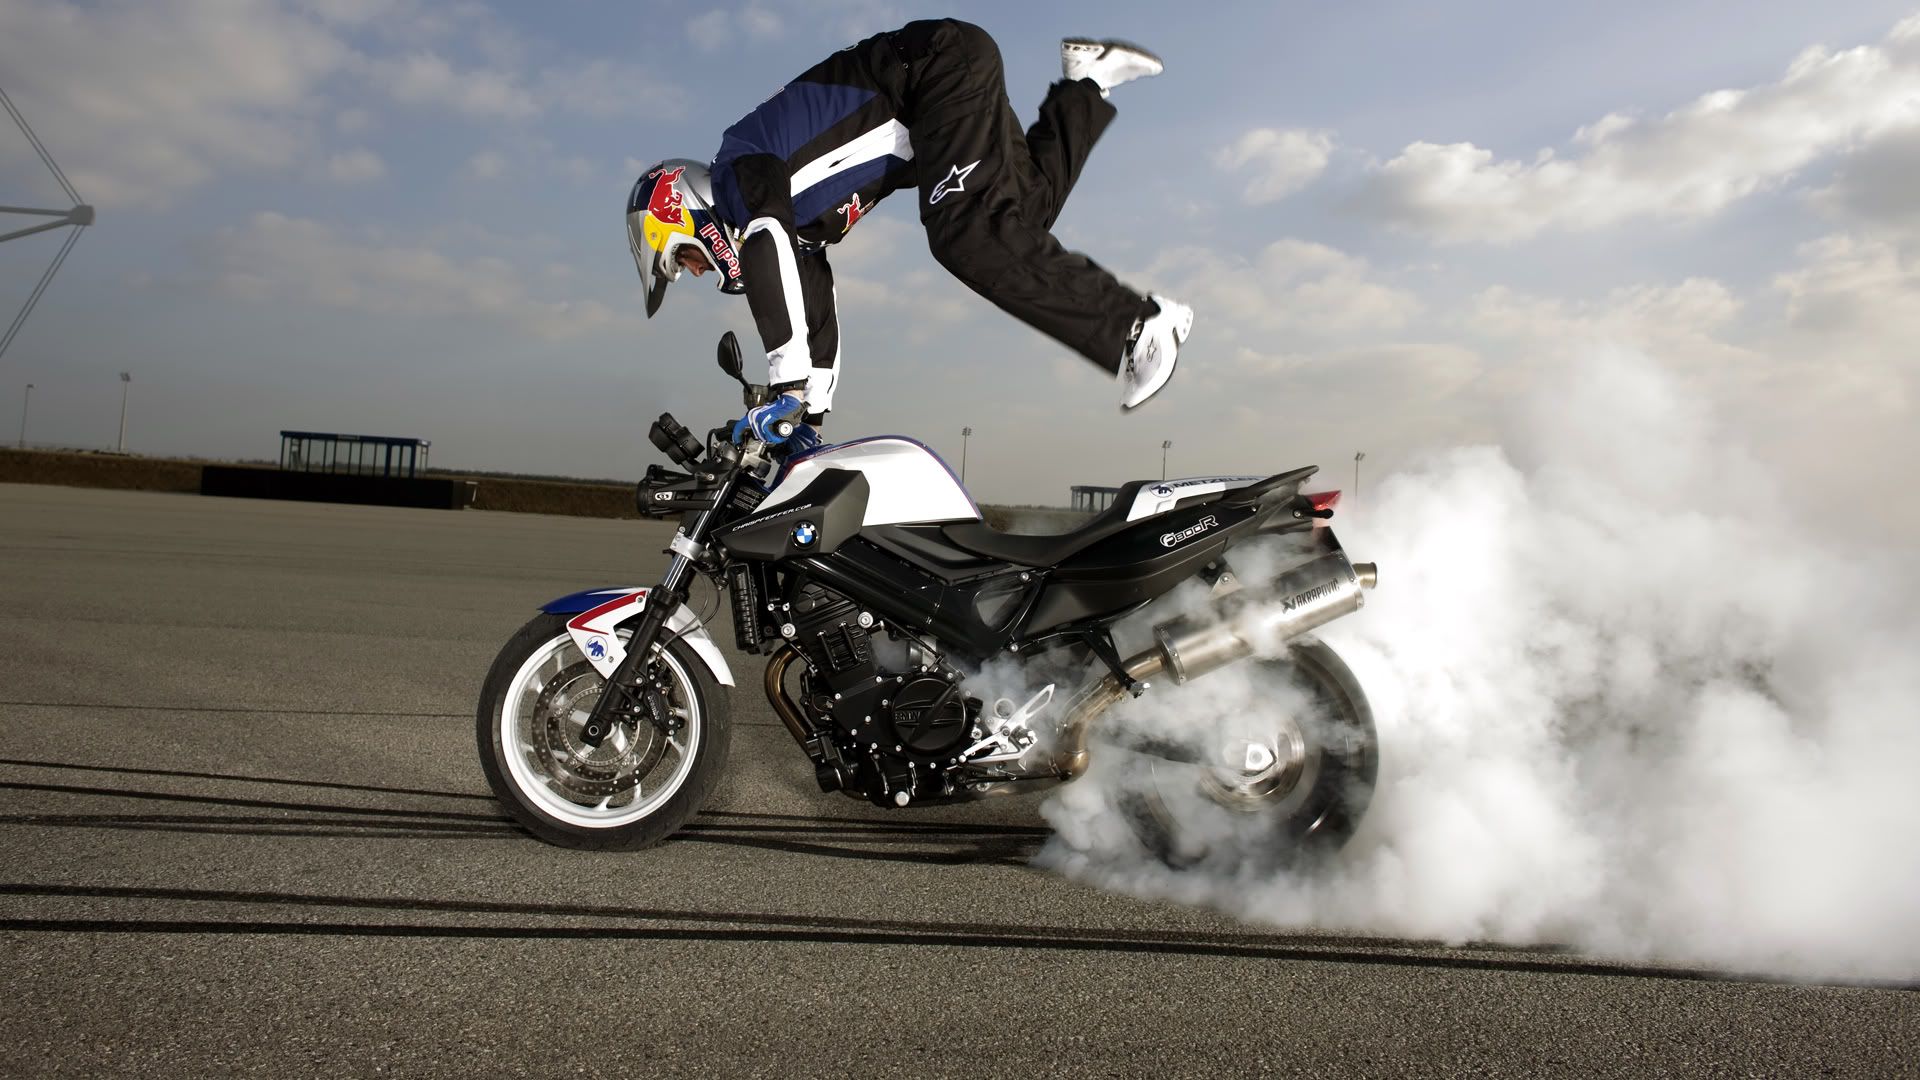 Motocross Stunt Wallpaper | Motocross Stunt Images | Cool Wallpapers